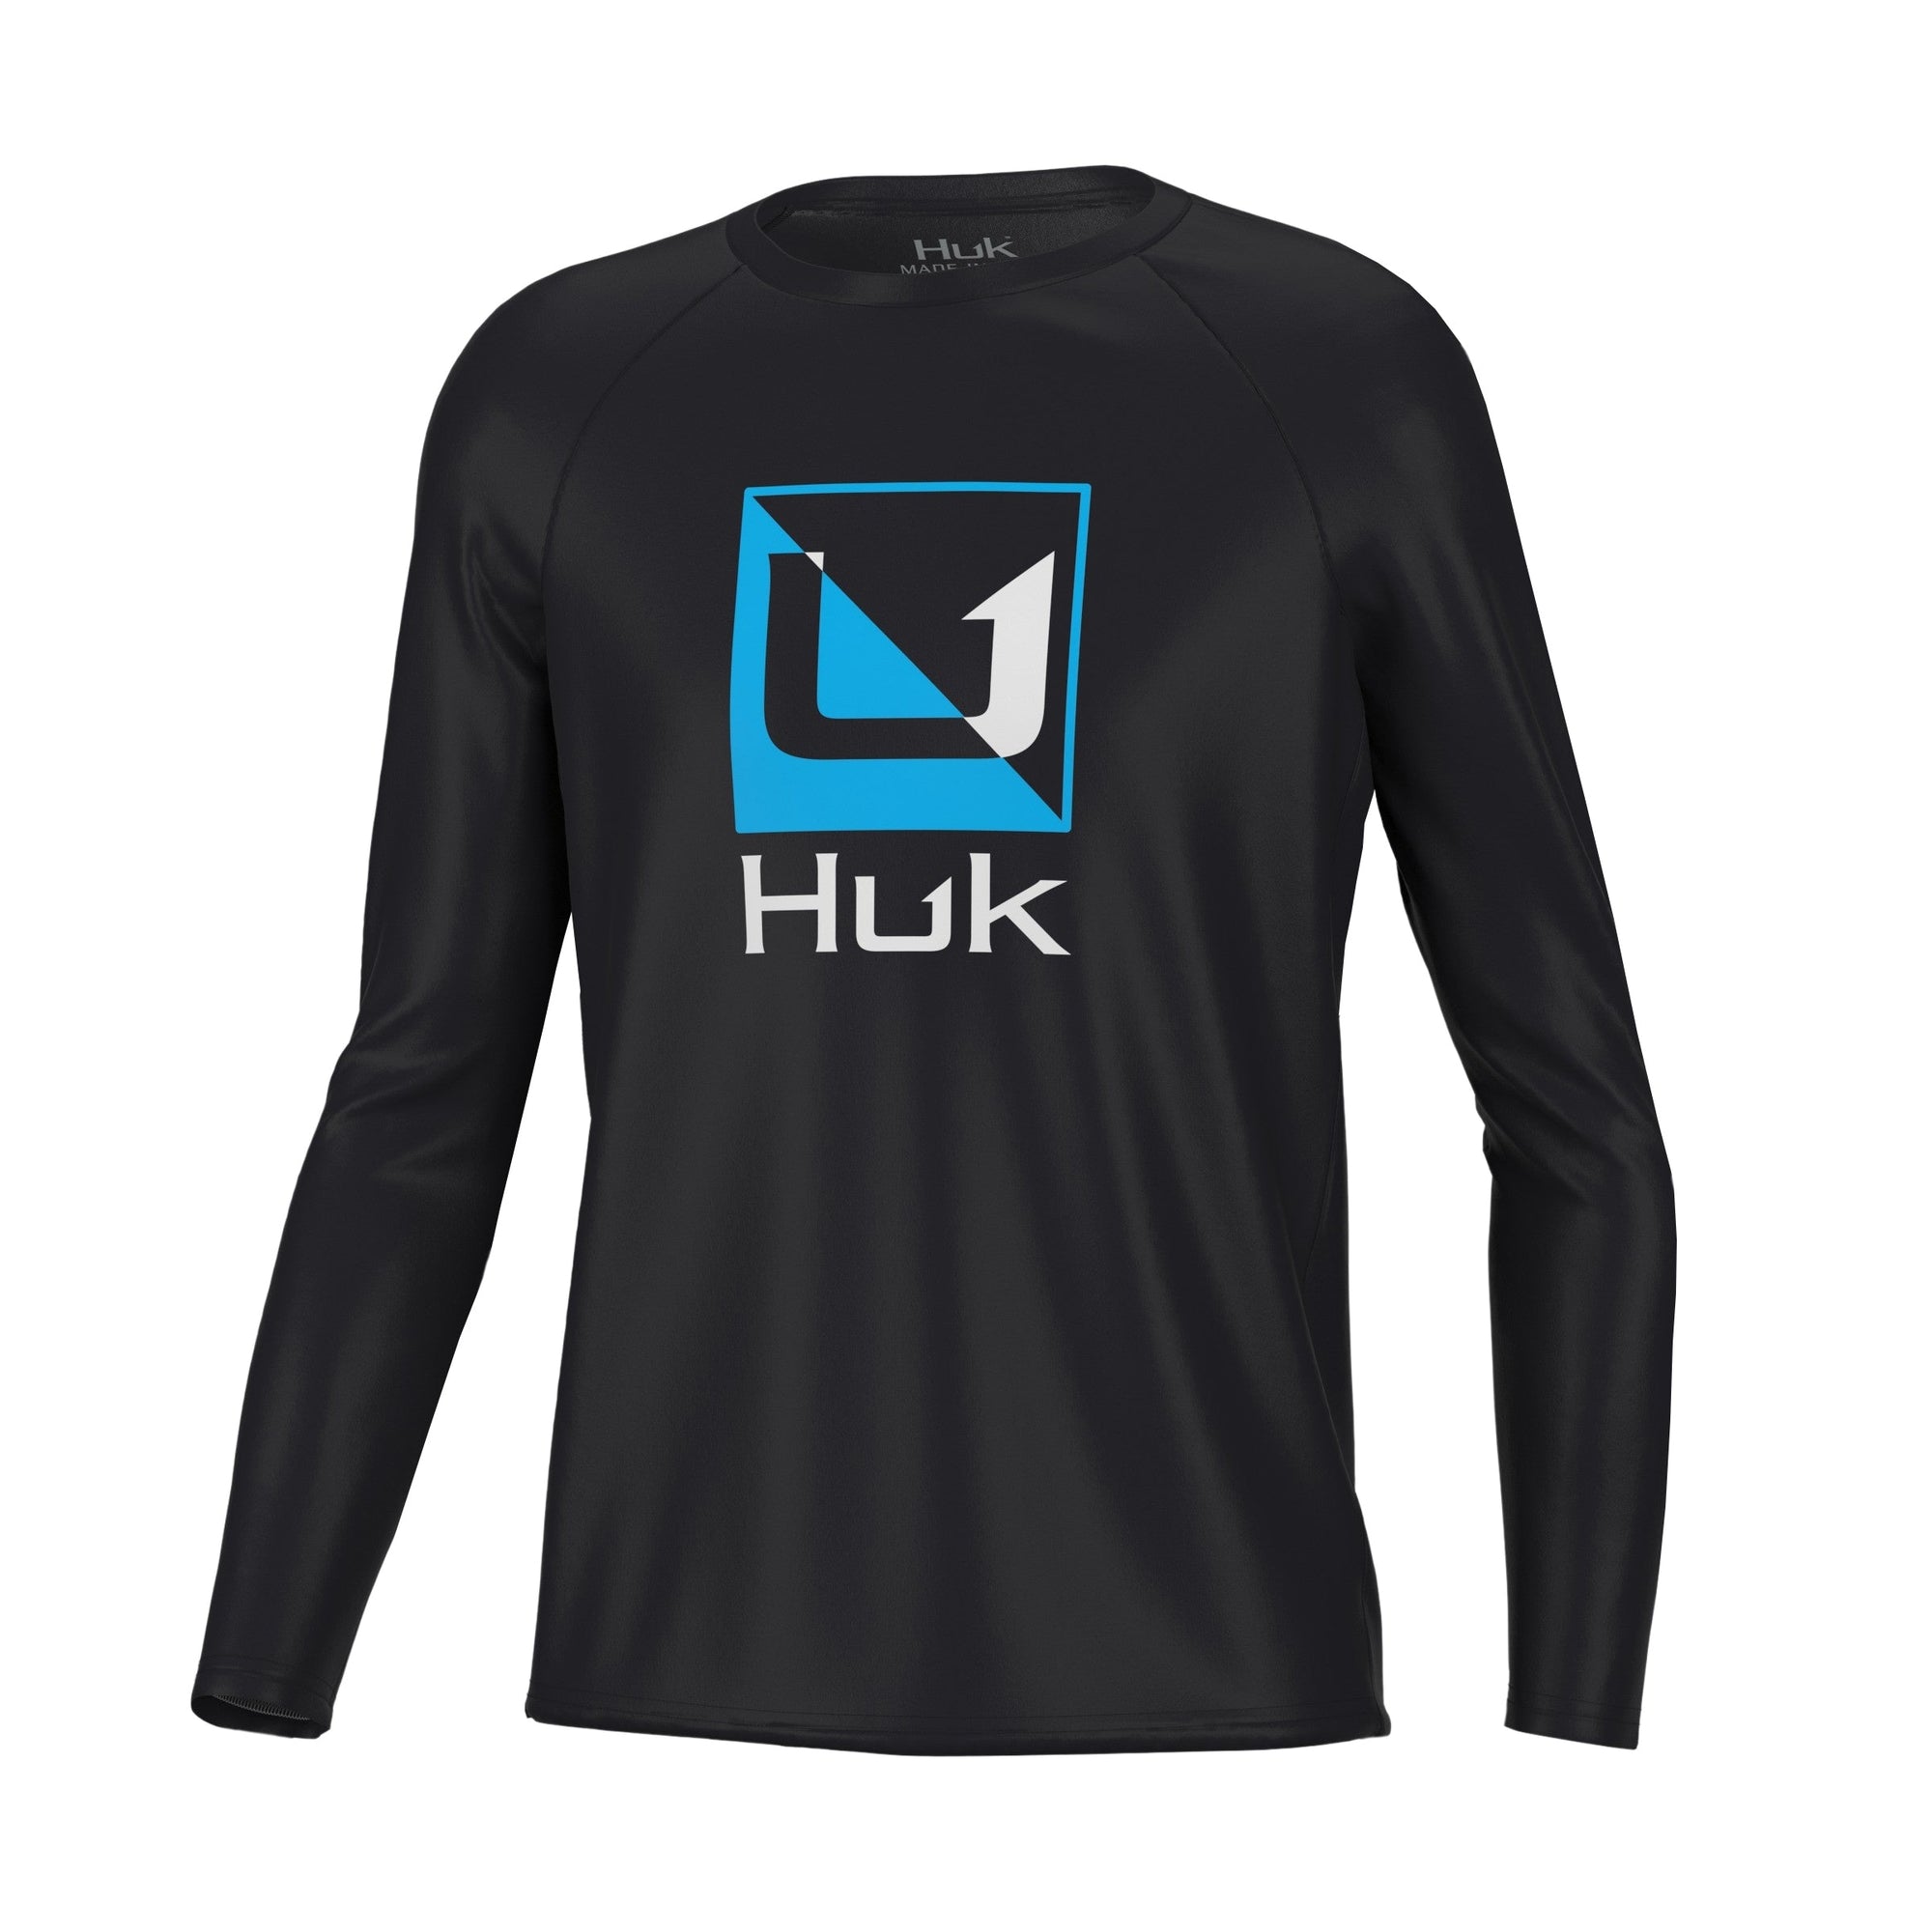 HUK Unisex Kid's Pursuit Solid Long Sleeve, Fishing Shirt